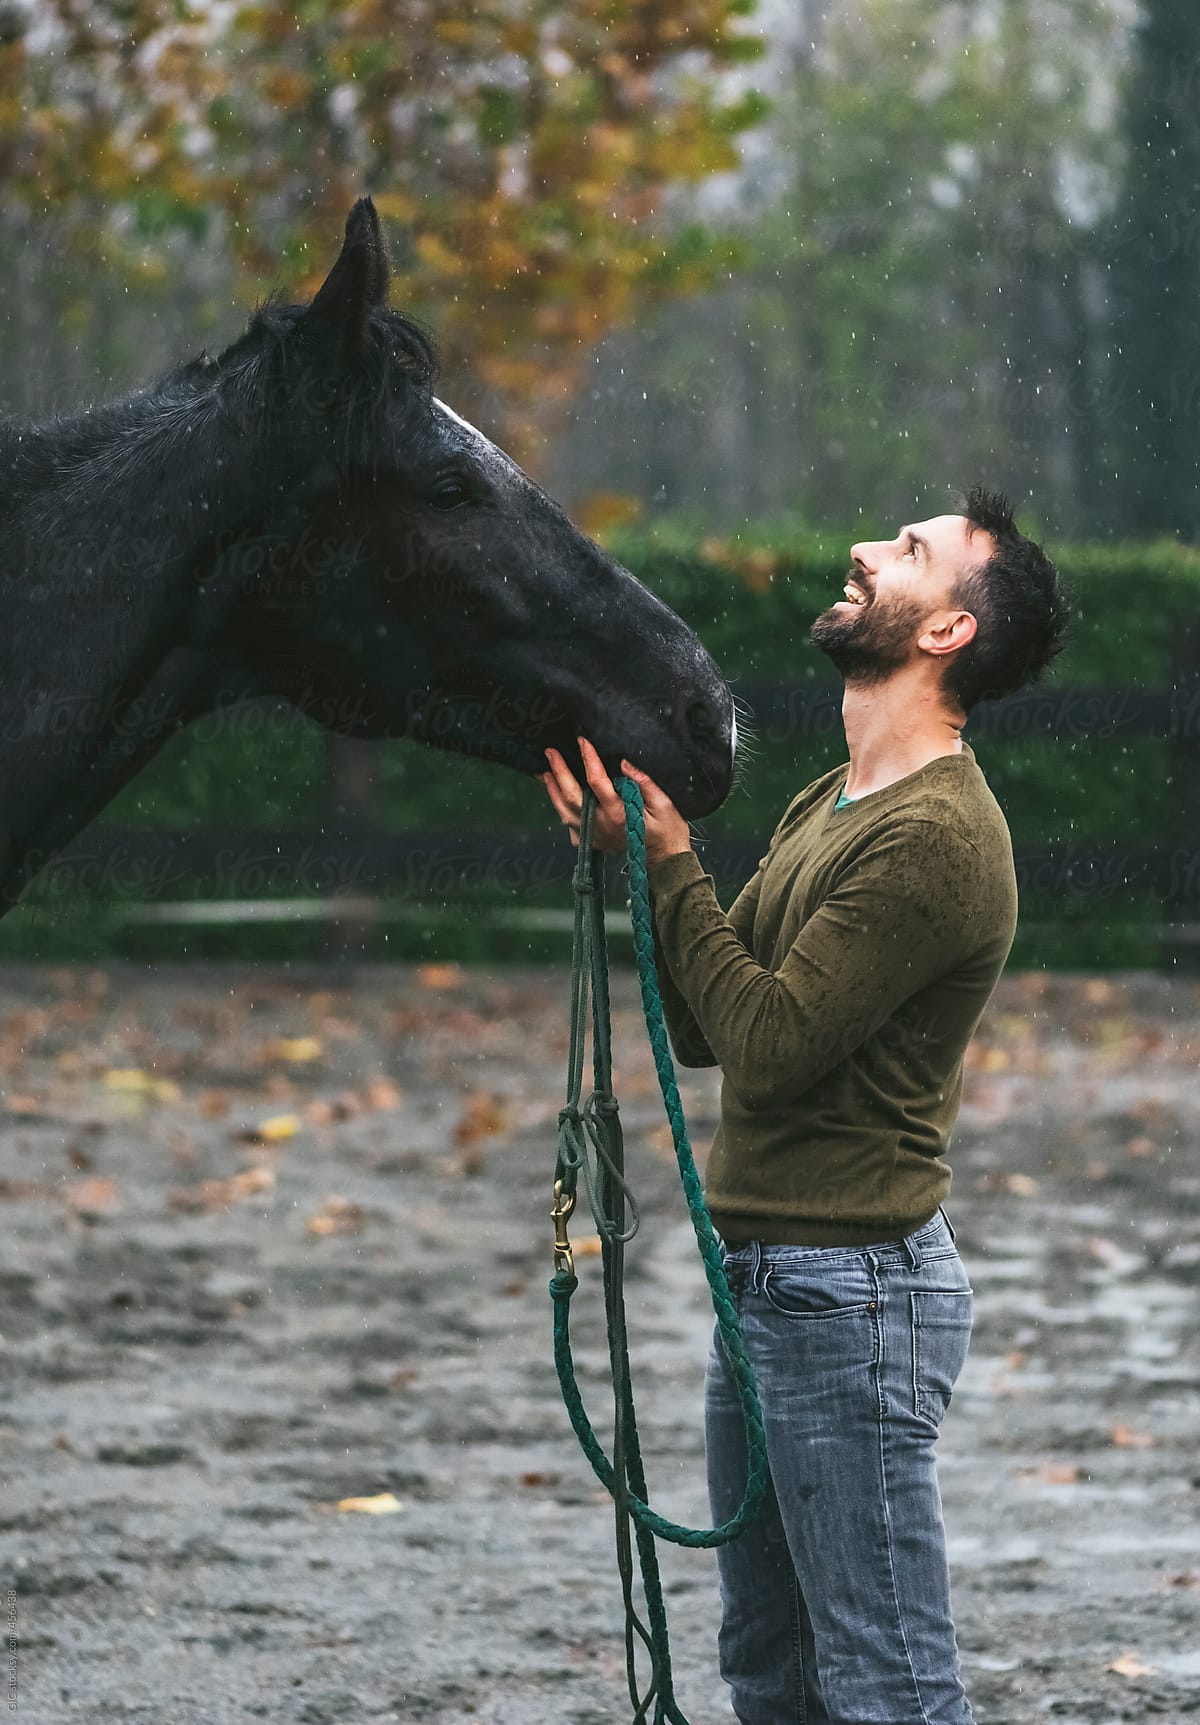 Man and horse enjoying the rain